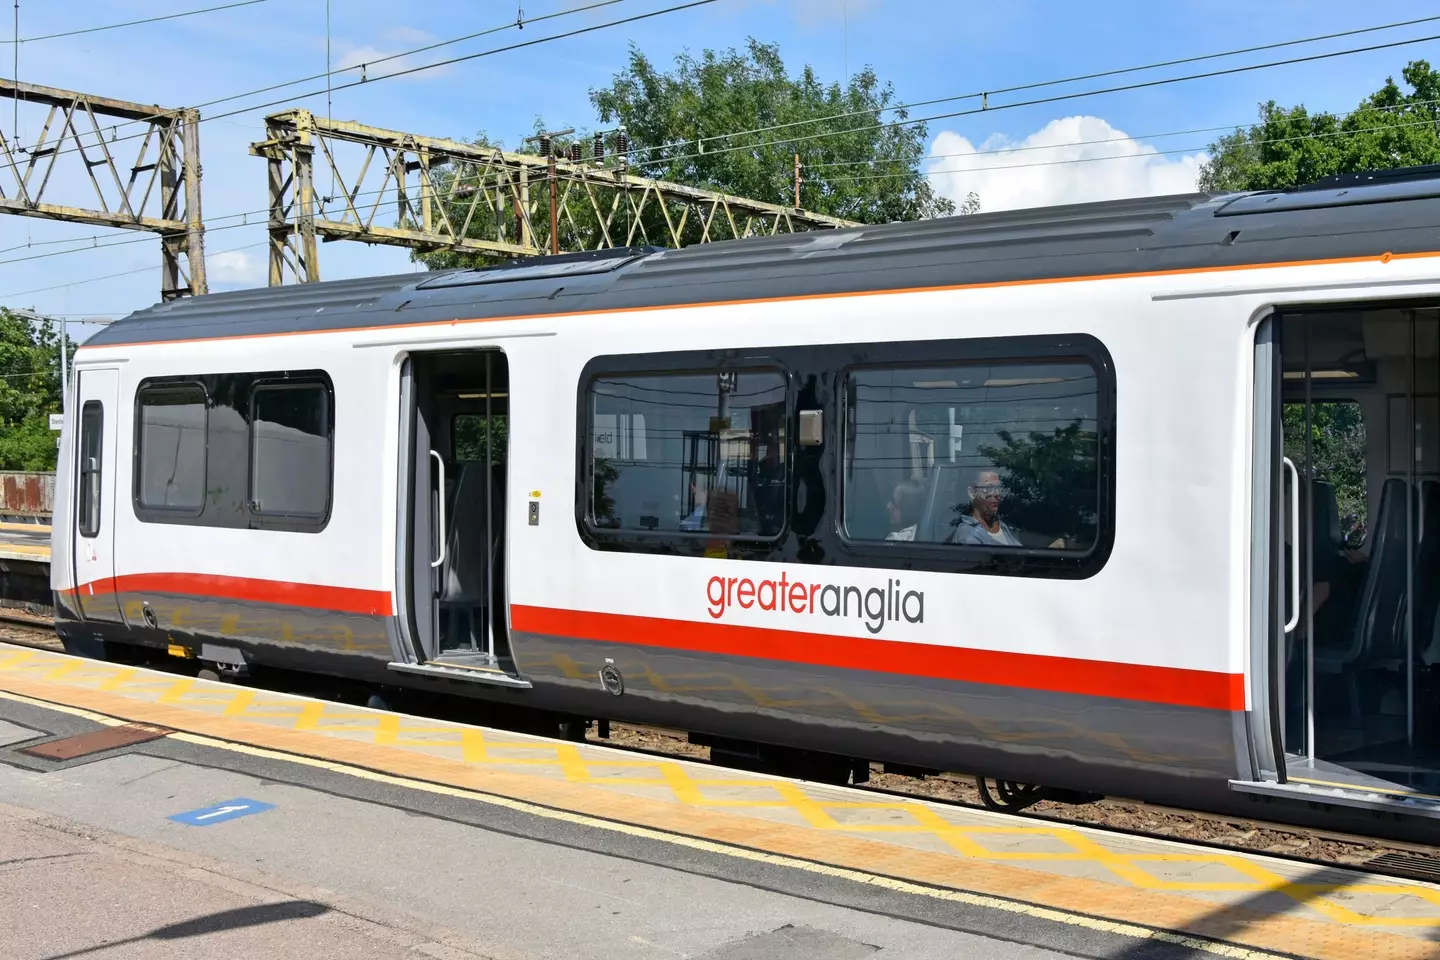 A Greater Anglia train.